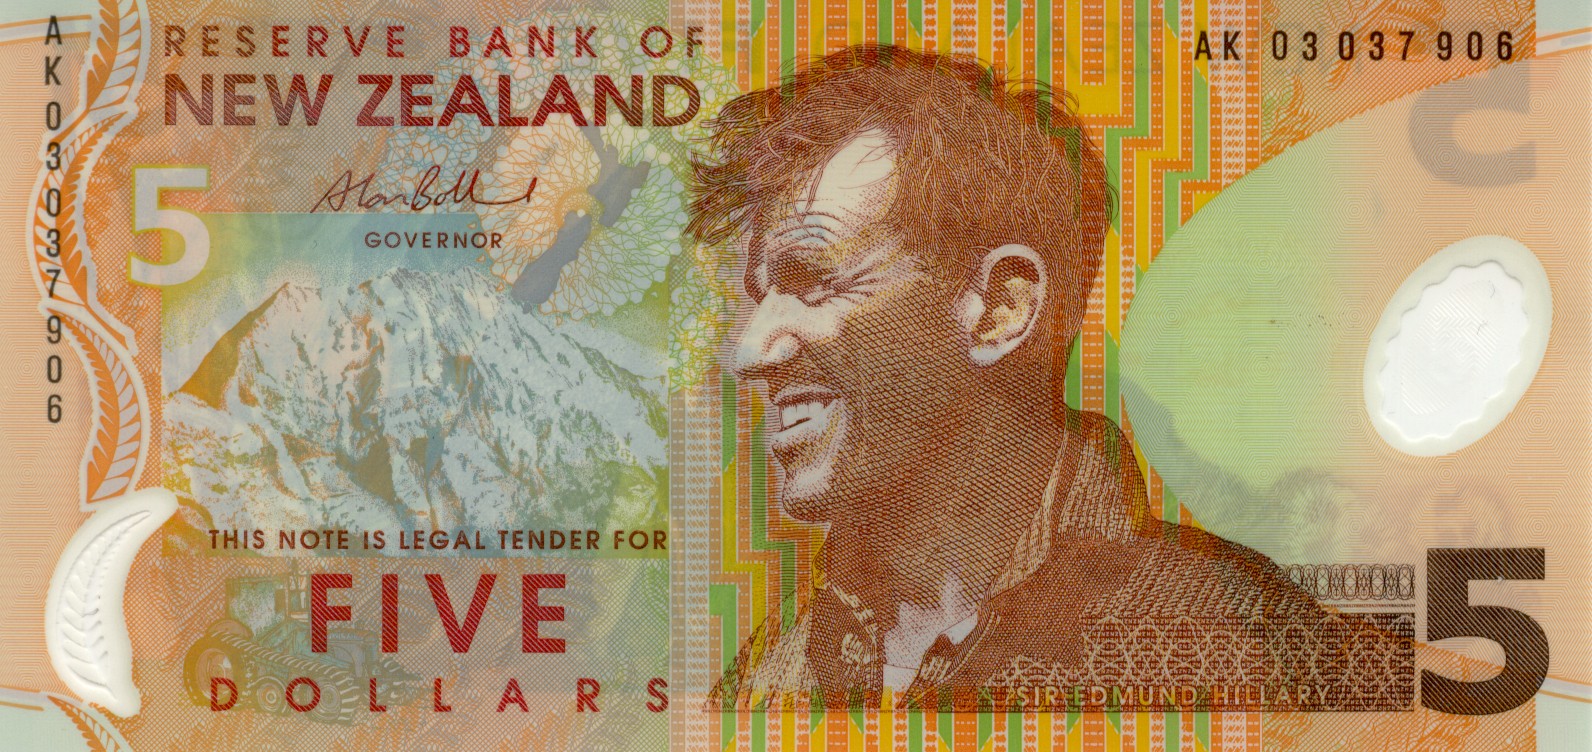 New-Zealand-Dollar-NZD-5-bank-note-2003-issue-Alan-Bollard-signature-Hillary-Everest-Massey-Fergusson-tractor-front-KAR